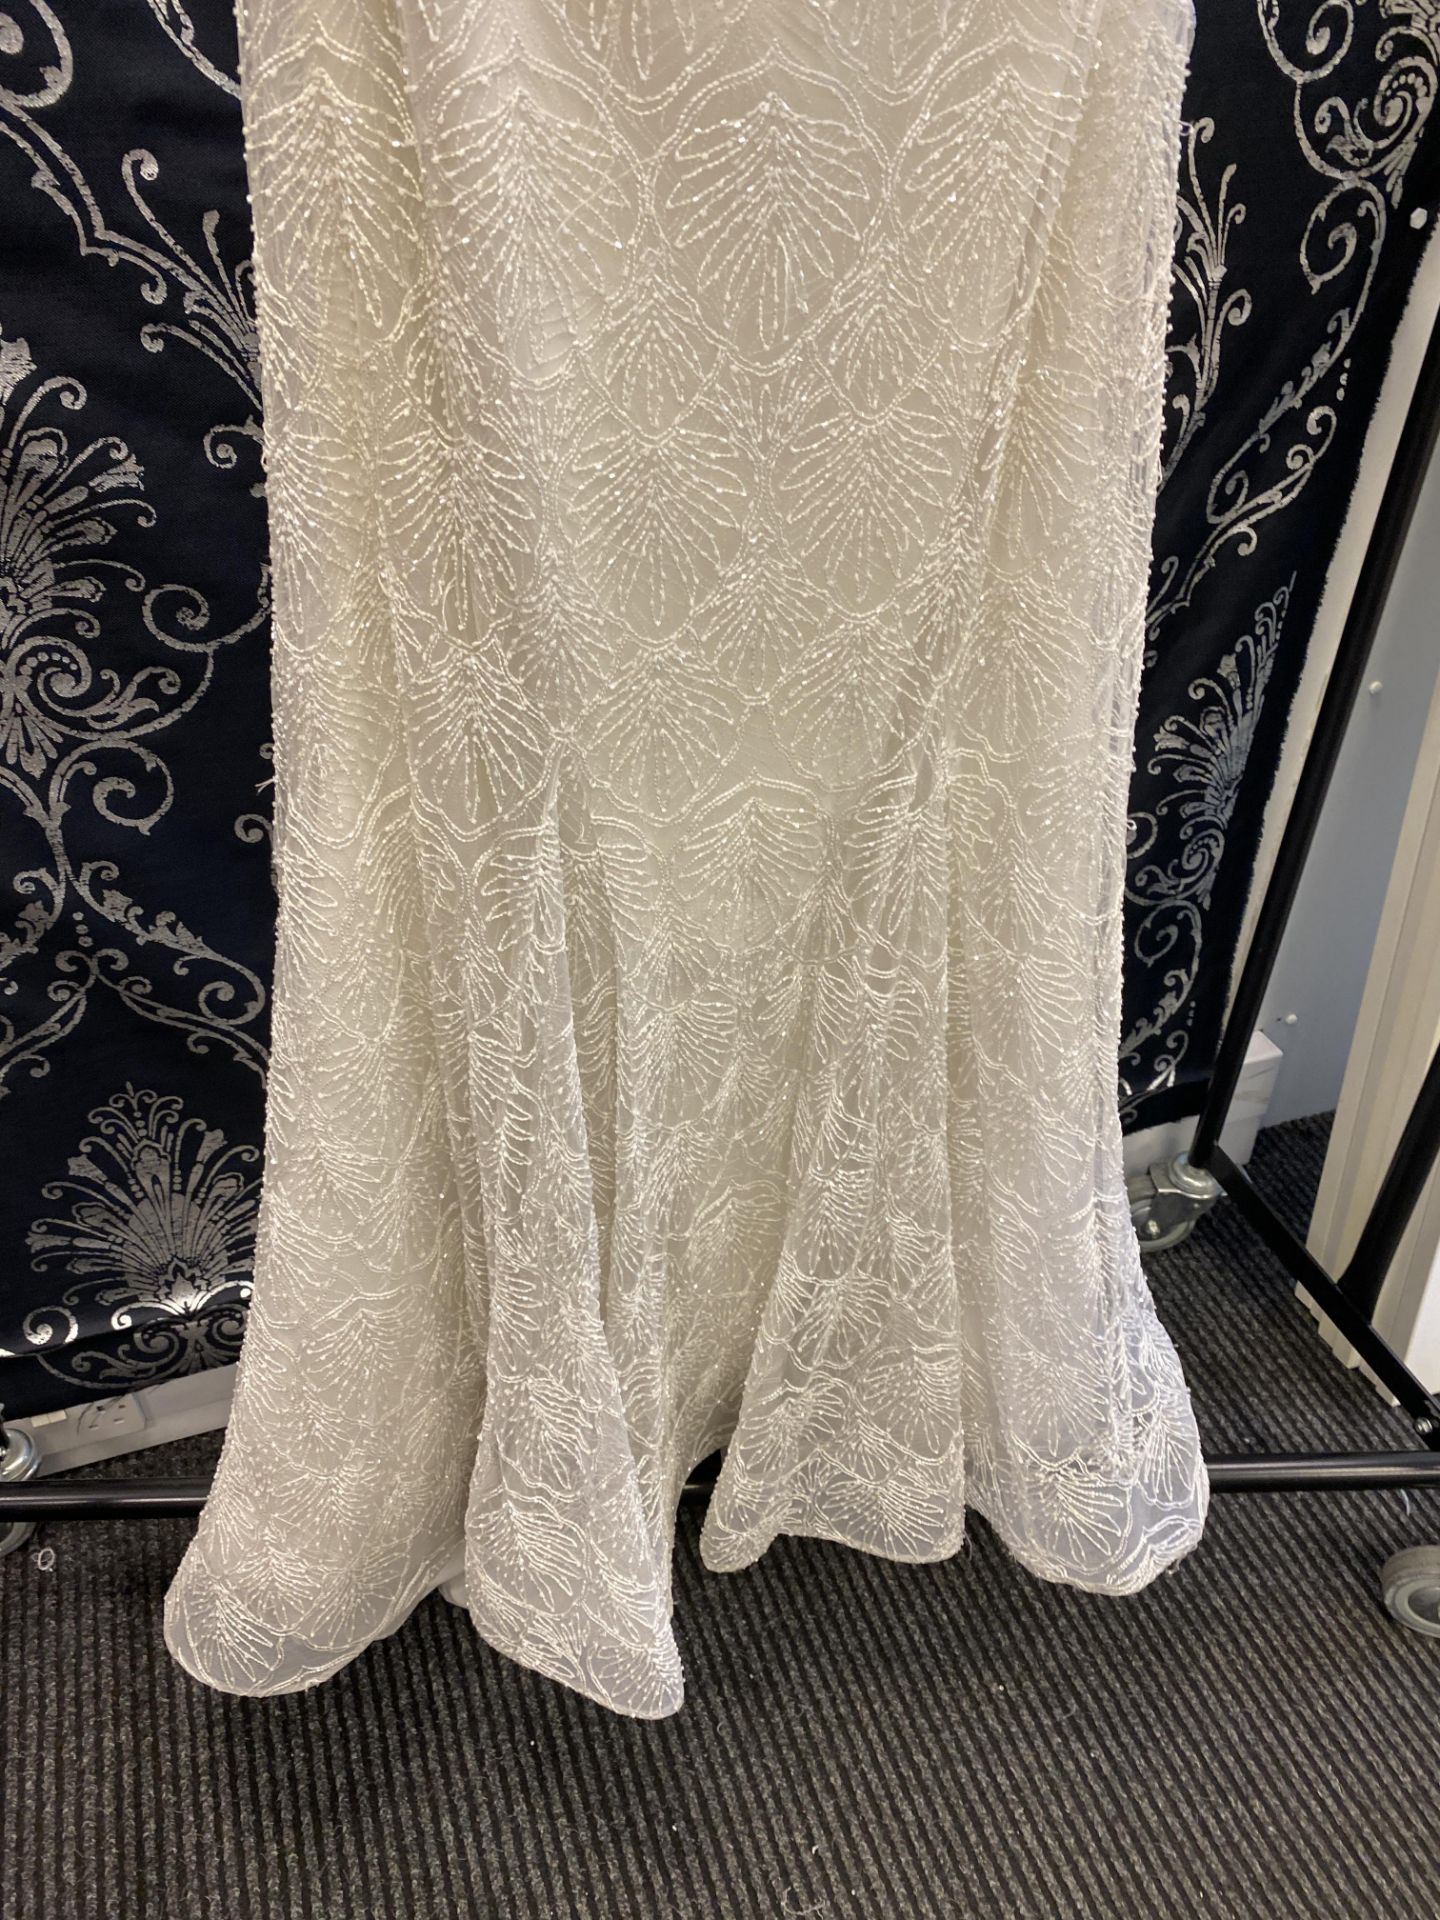 1 x LUSAN MANDONGUS/ LM 'Verna'Beautiful Strapless Lace Fishtail Designer Wedding Dress RRP £2,500 - Image 6 of 8